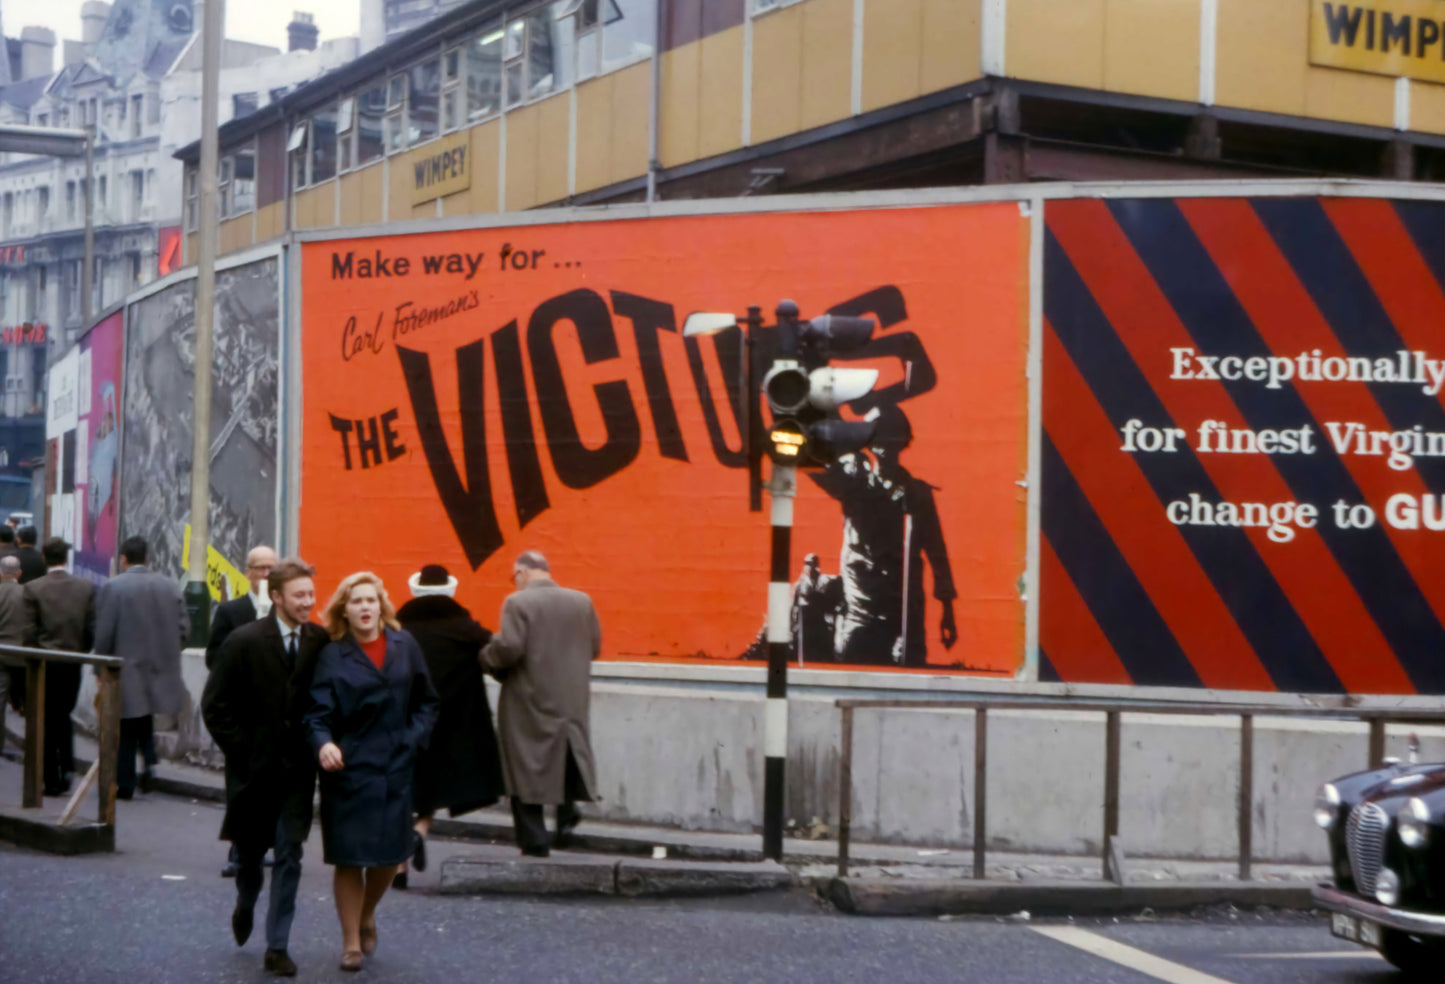 St Giles Circus, London by Bob Hyde c.1965. 